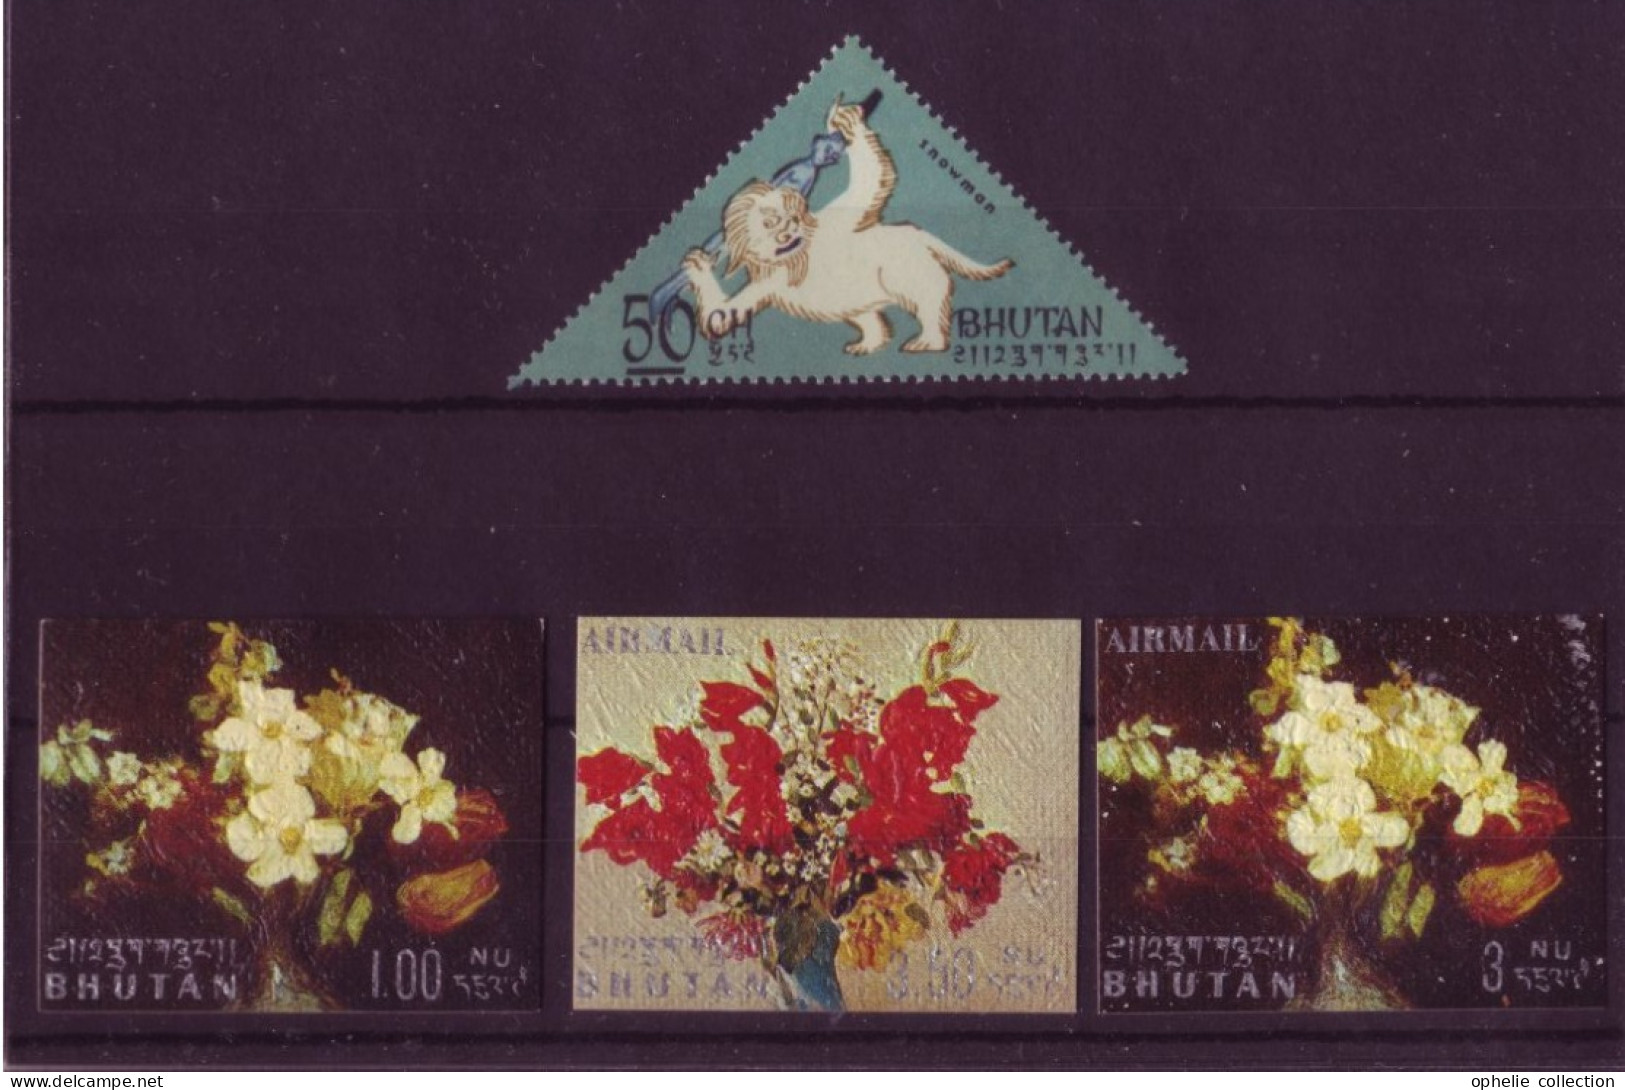 Asie - Bhutan - Insolit Stamps - 4 Timbres Différents  - 6872 - Bhutan